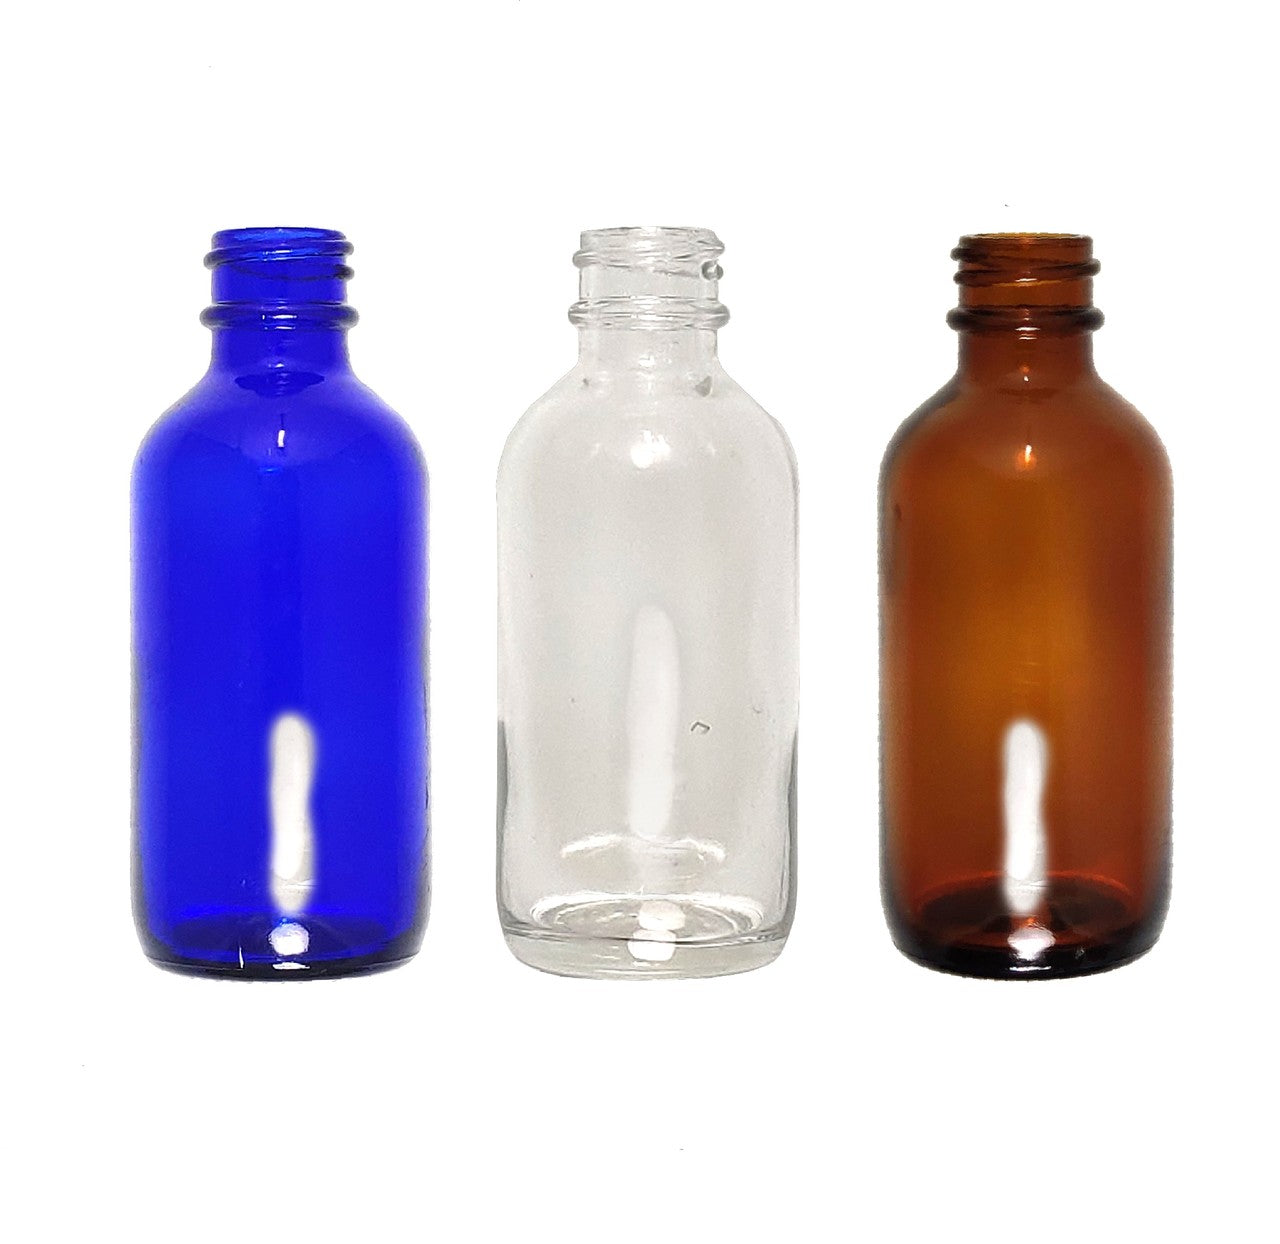 Parkway Boston Round Glass Bottle, 20mm - 2oz OK0327LK